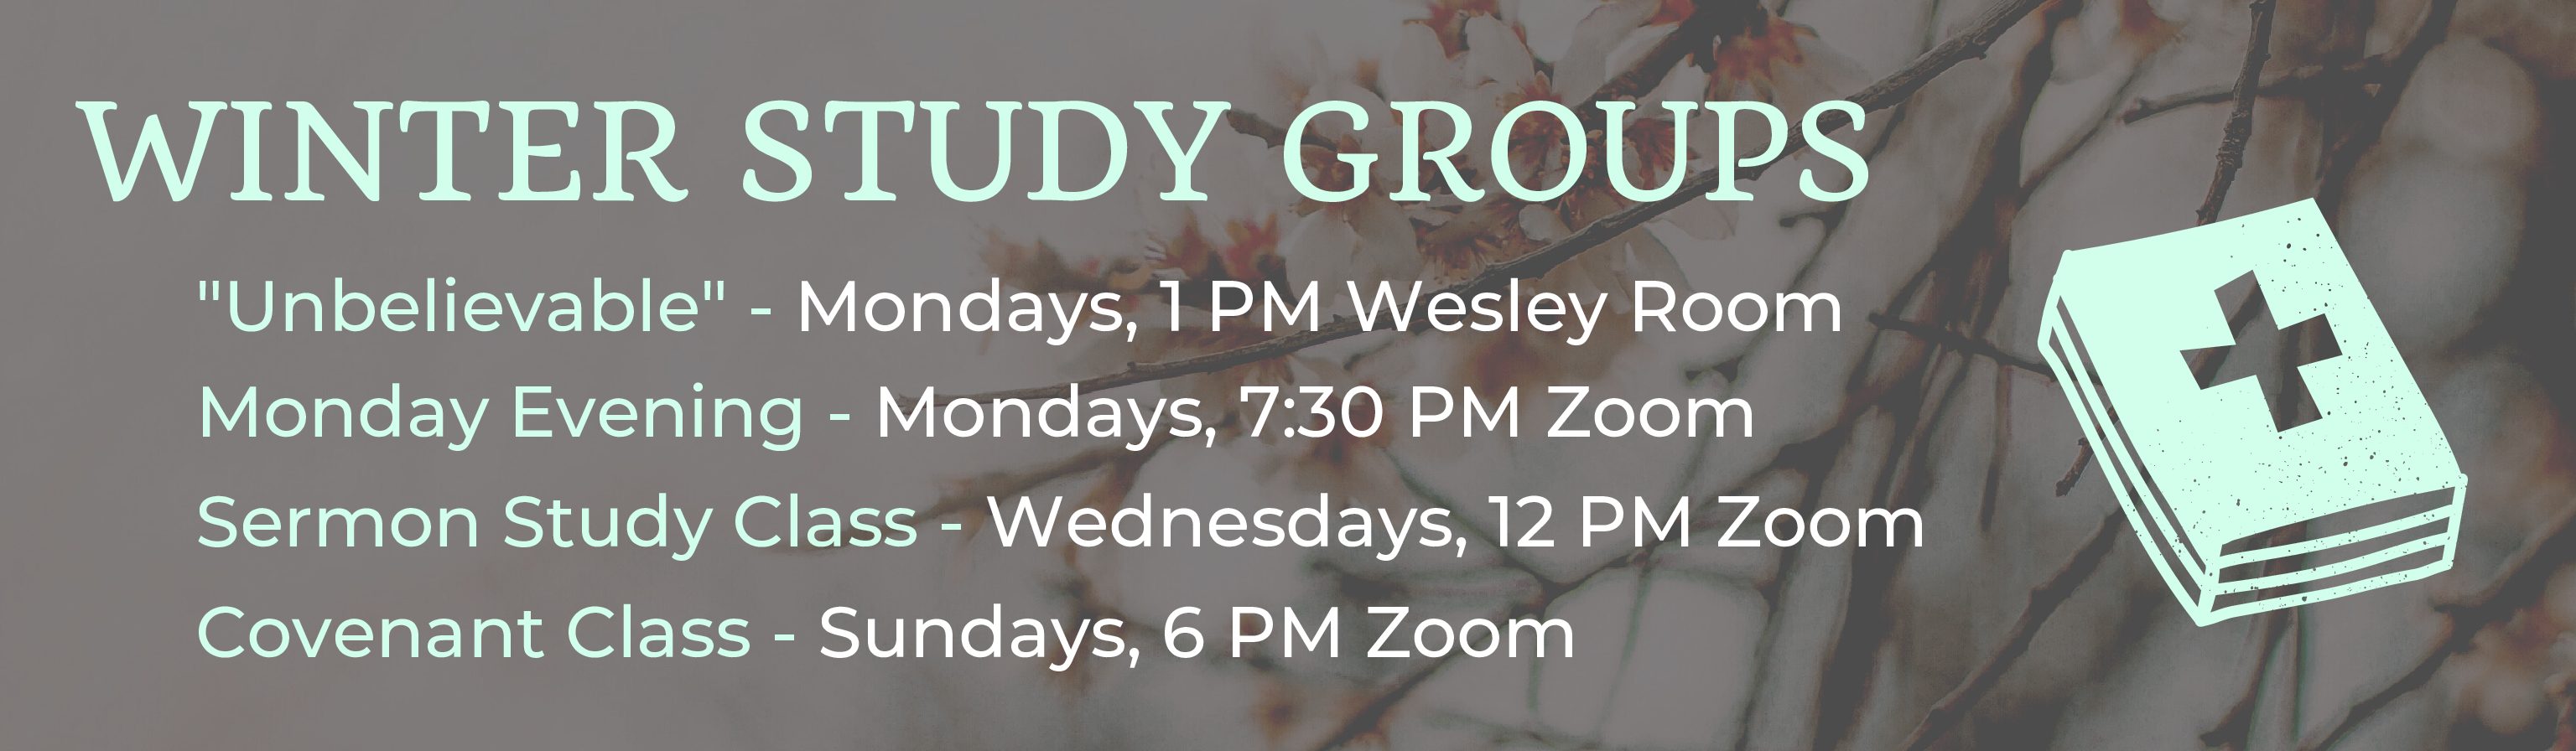 Winter Study Groups Banner